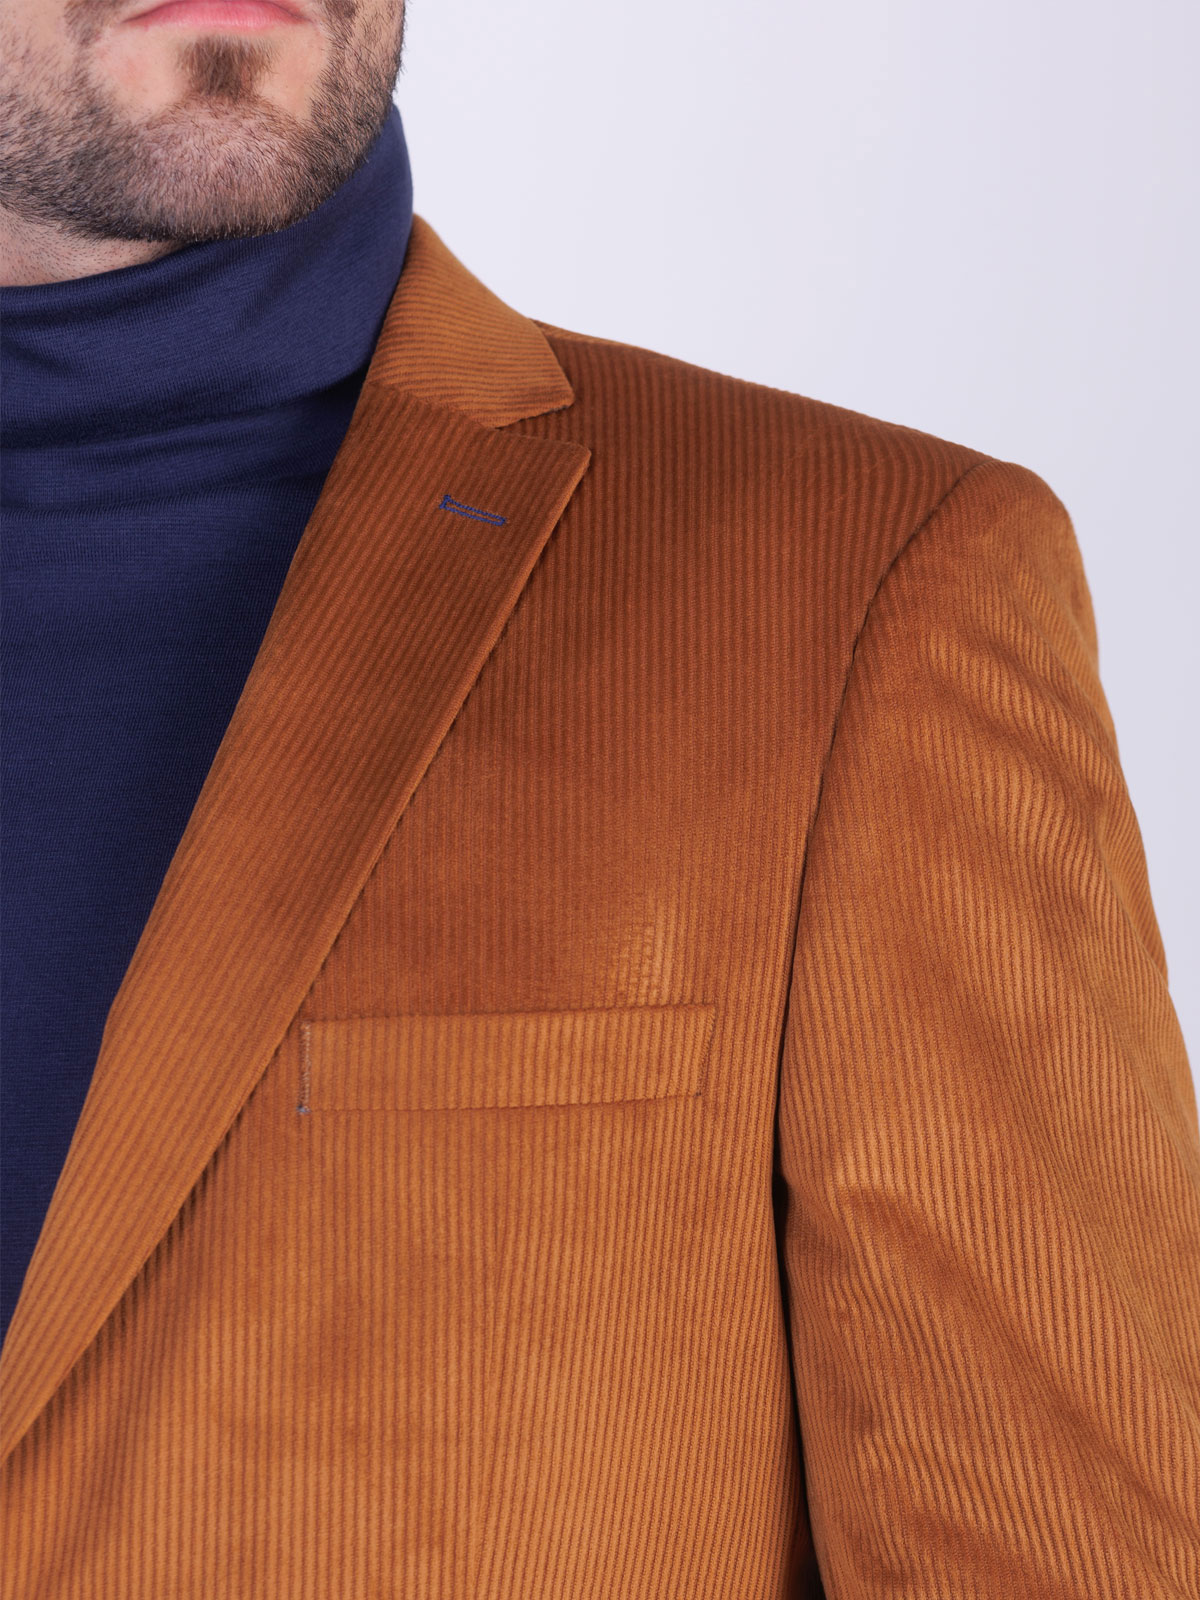 Twopiece suit in mustard color - 68067 € 191.22 img3